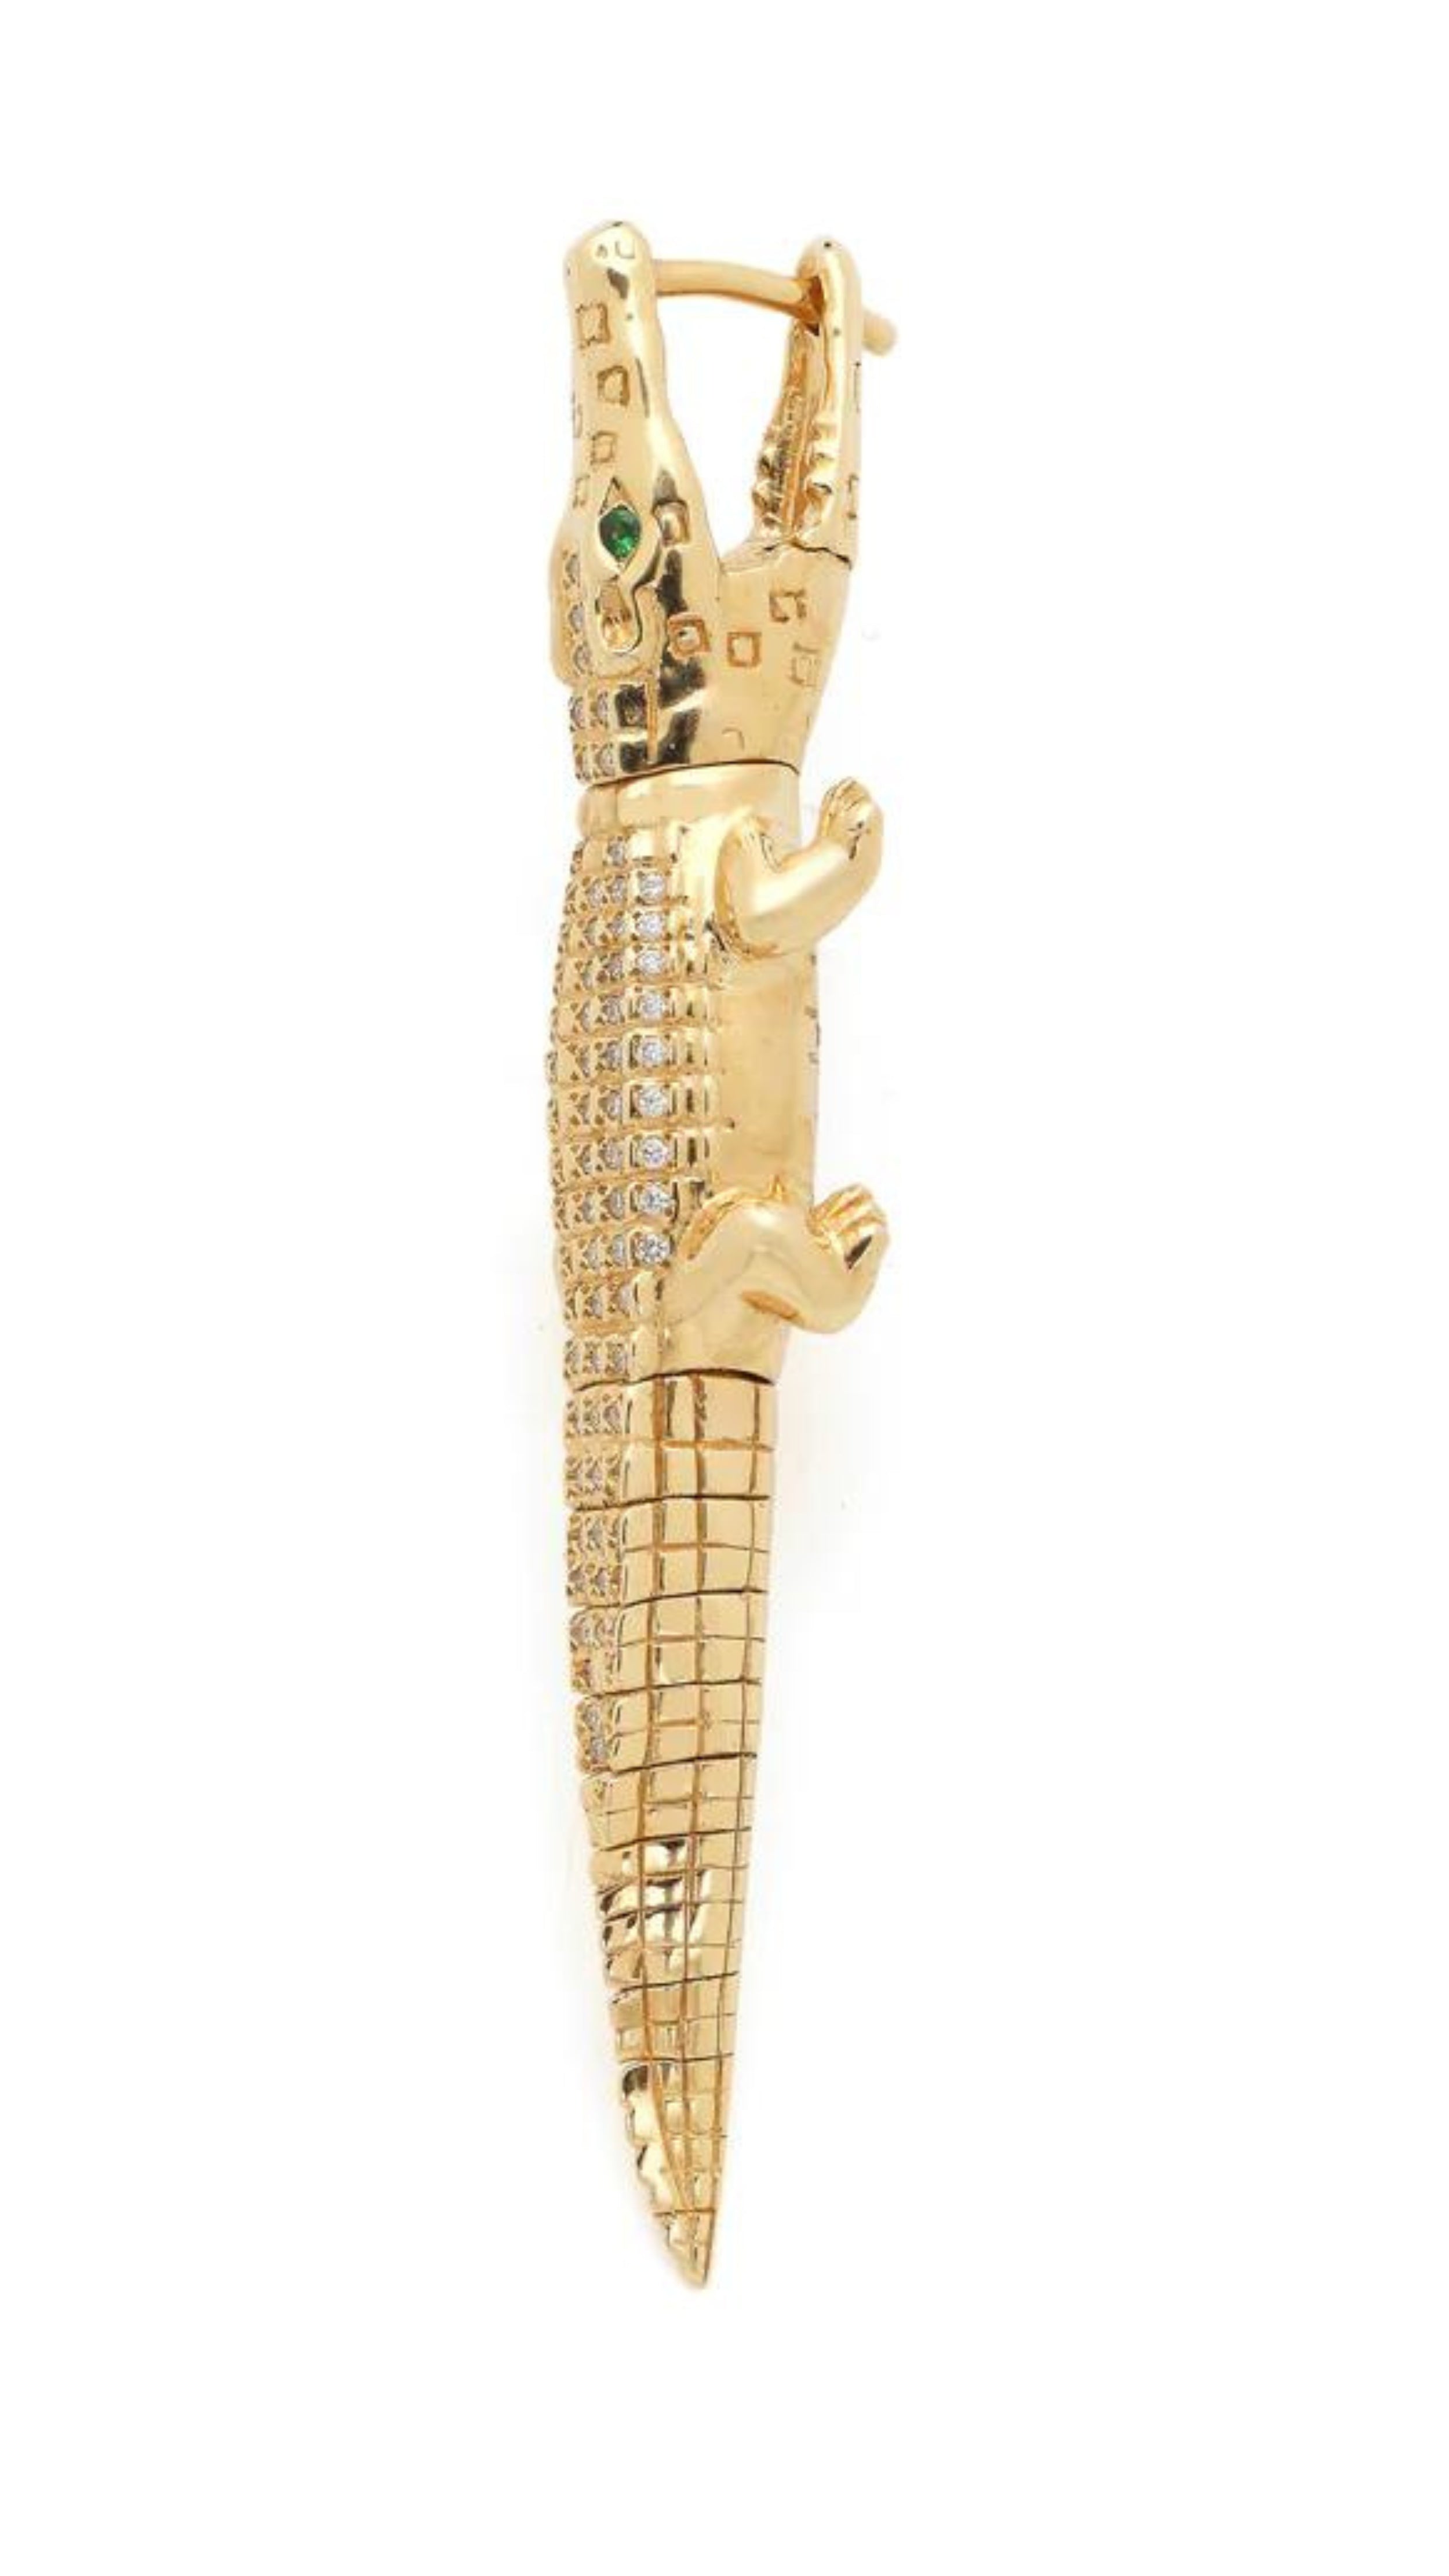 Bibi van der Velden, Alligator Bite Diamond Earring. Single alligator earring crafted in 18K gold with white diamond pace body. Shown from the side.